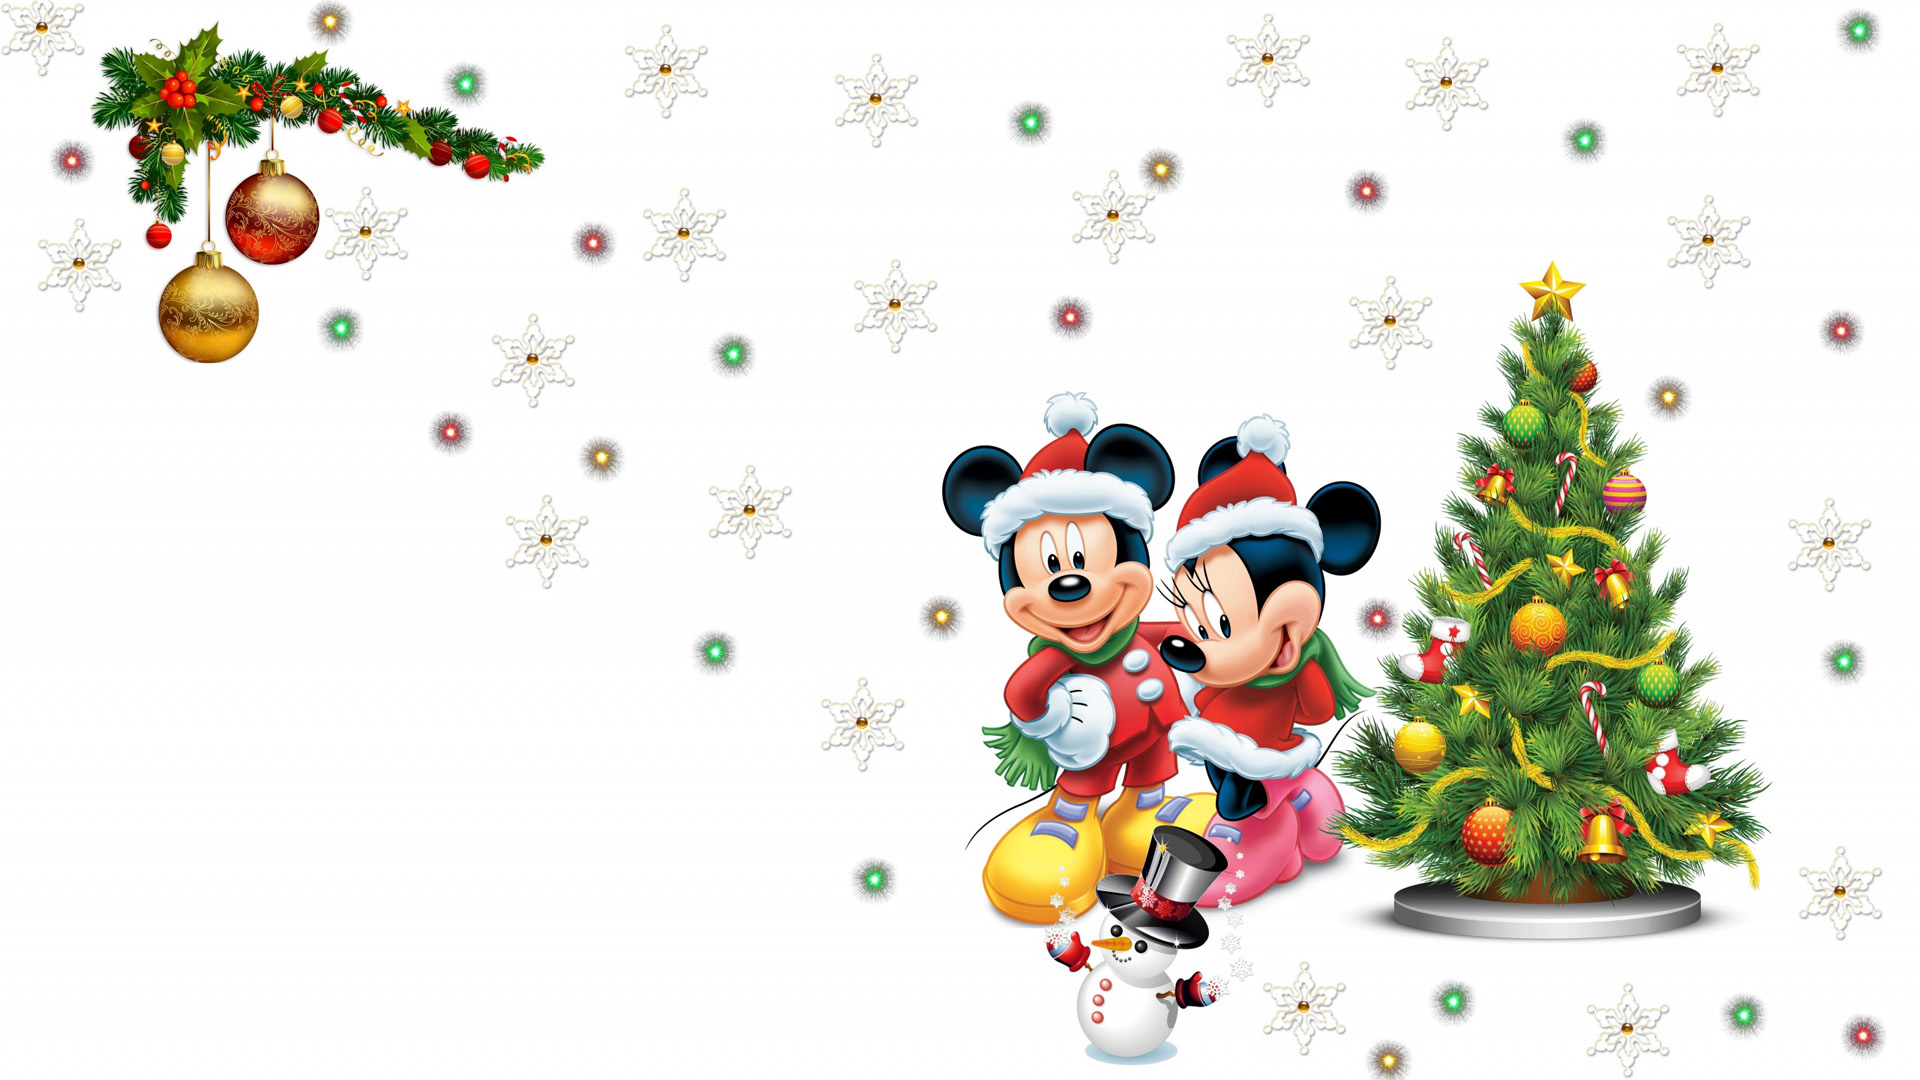 29+] Mickey and Minnie Mouse Christmas Wallpapers - WallpaperSafari